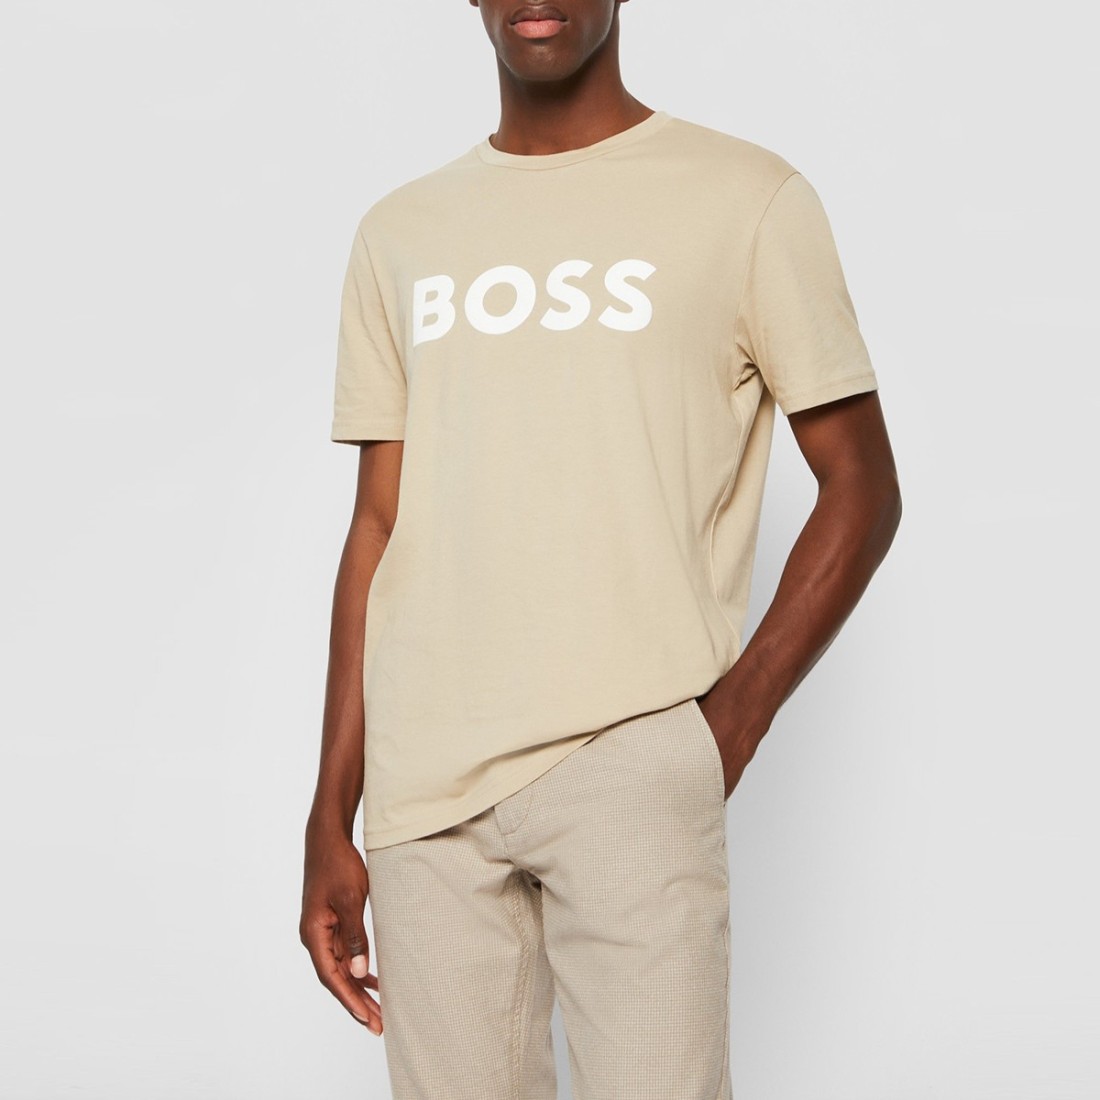 Image of BOSS - T-shirt Thinking - Colore: Beige,Taglia: M